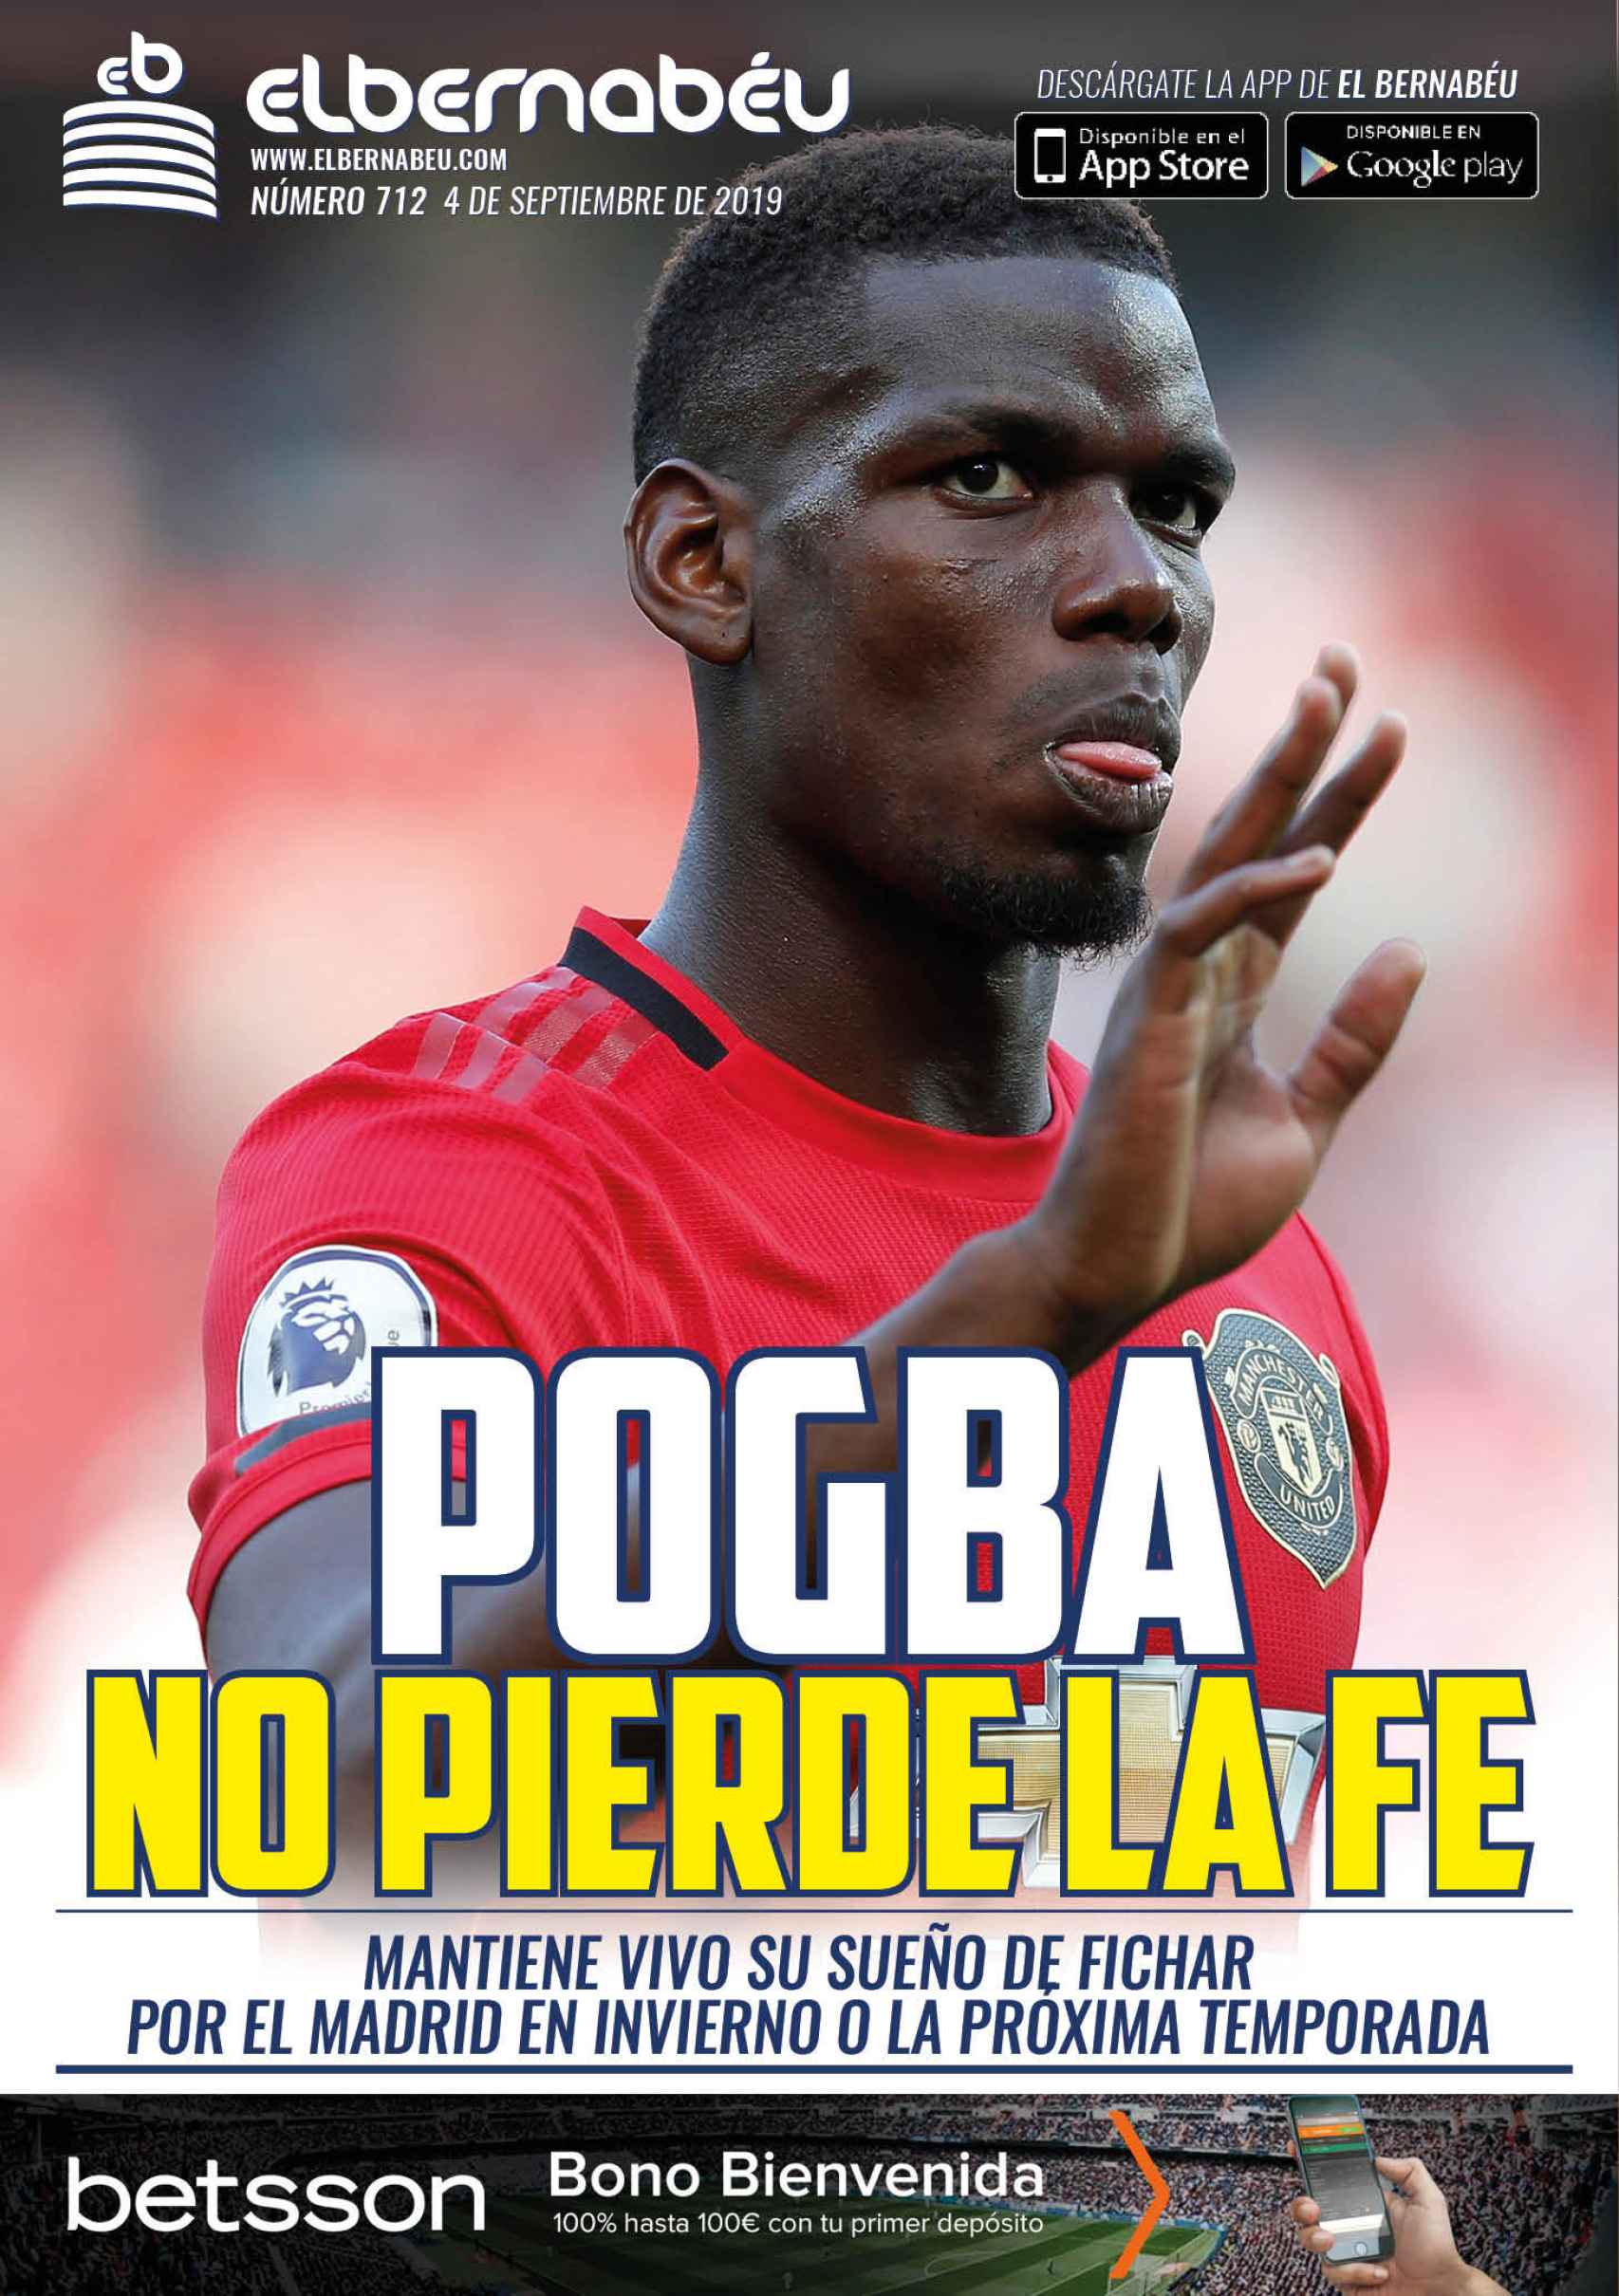 La portada de El Bernabéu (04/09/2019)